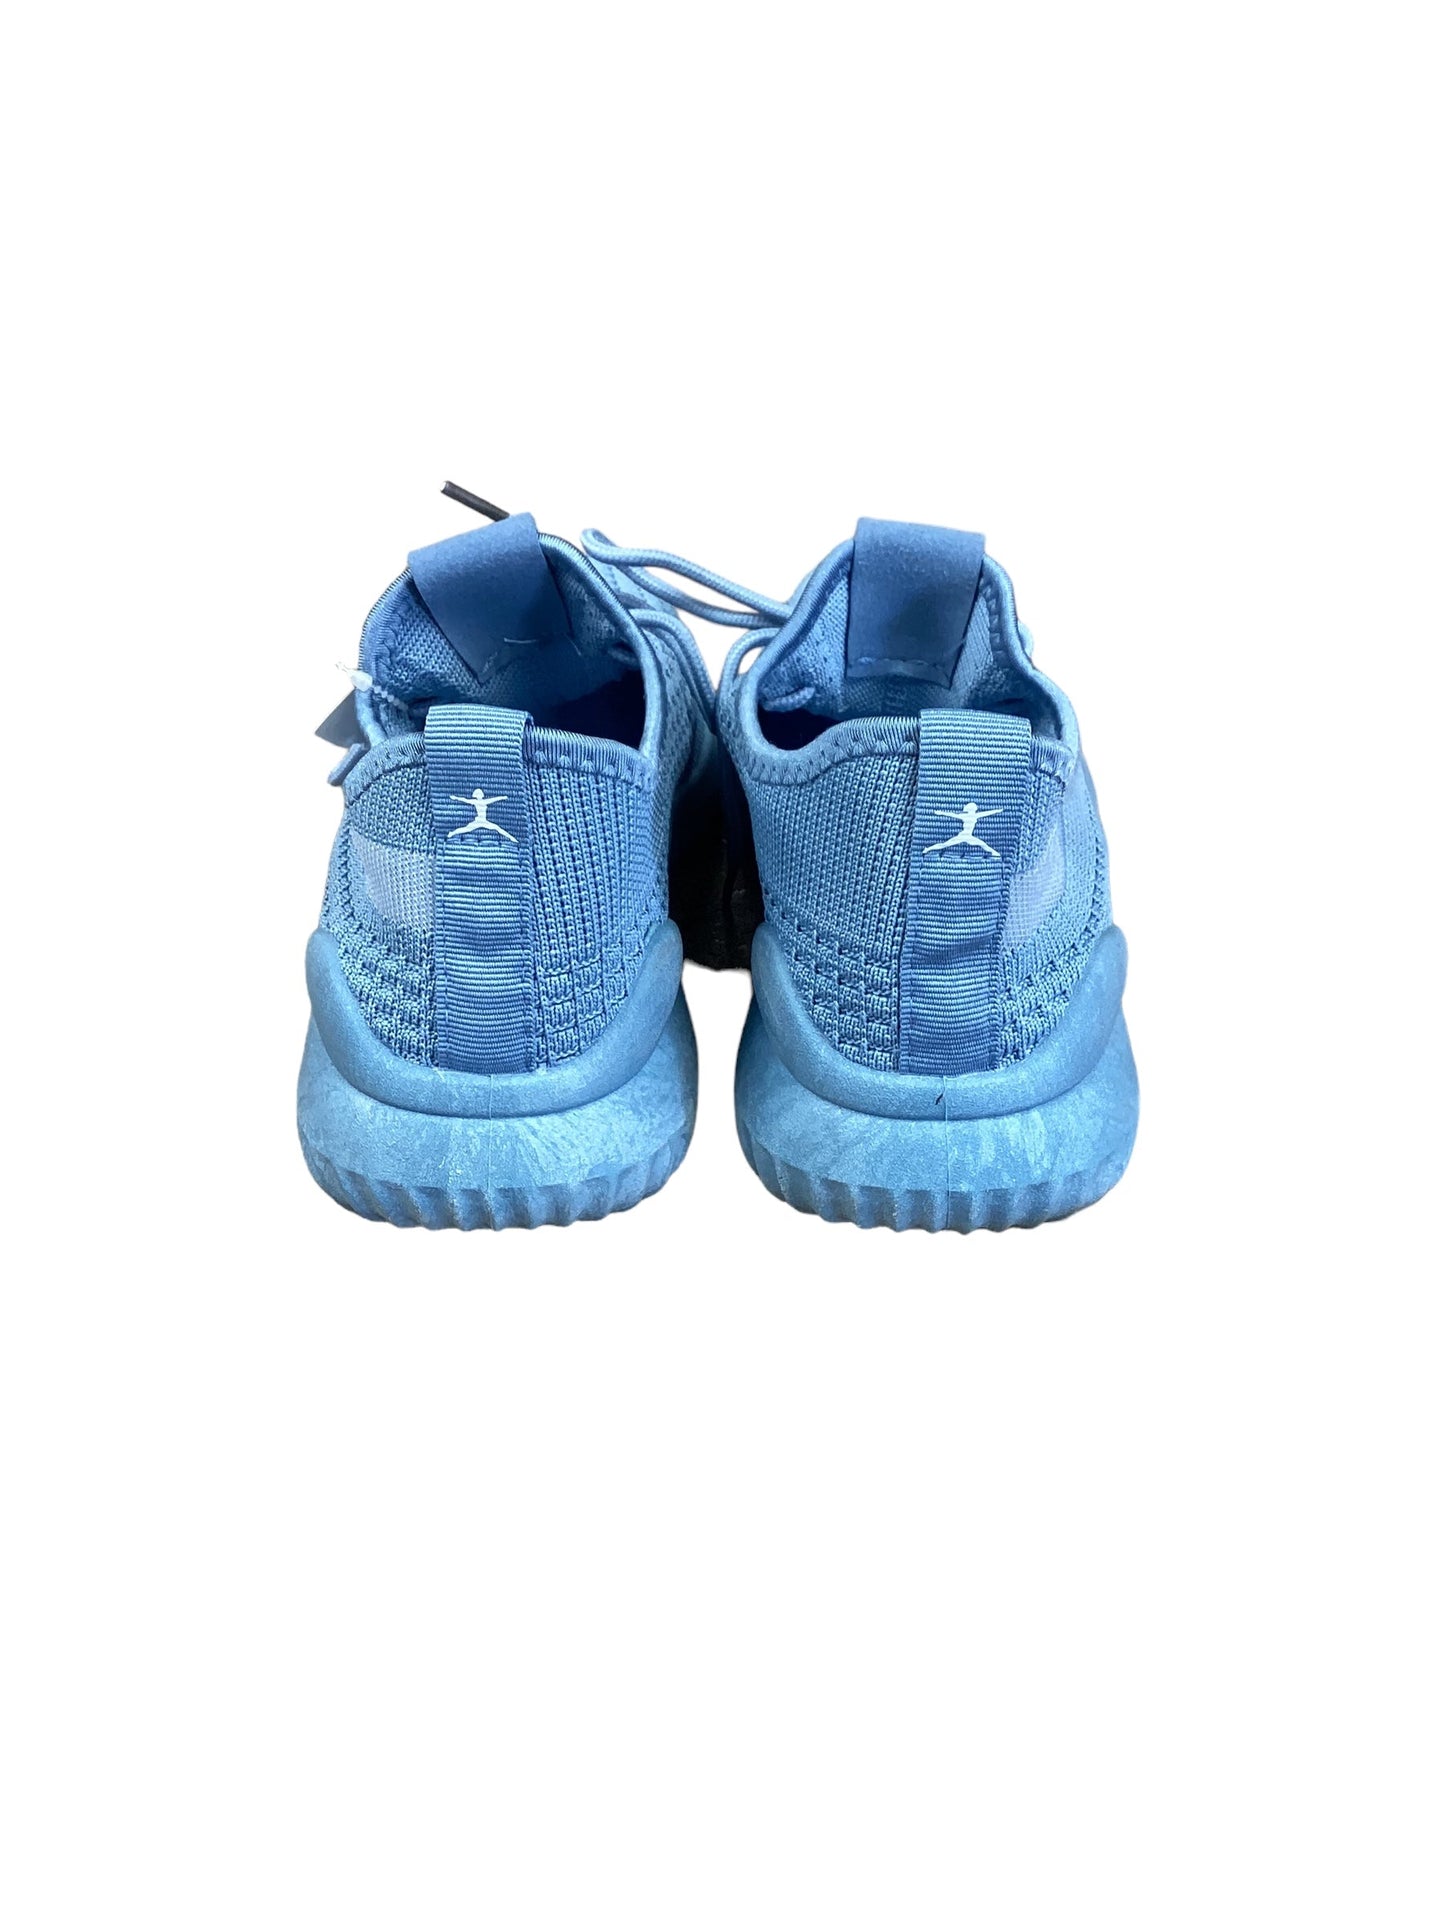 Blue Shoes Athletic Danskin, Size 9